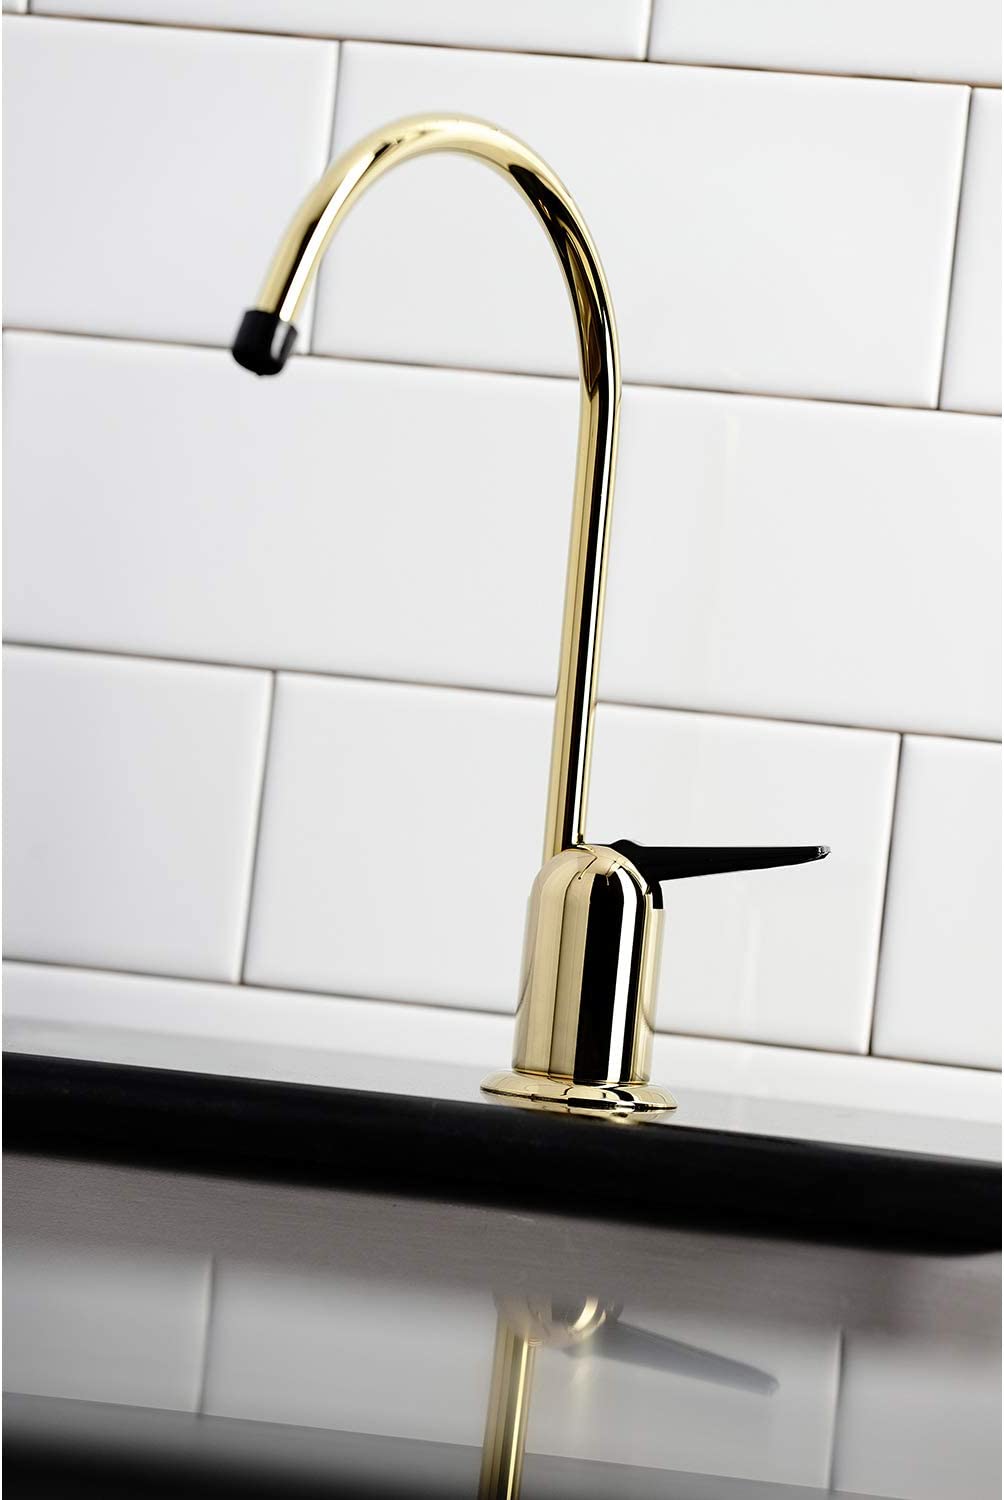 Kingston Brass K6192 Americana Water Filtration Faucet, Polished Brass